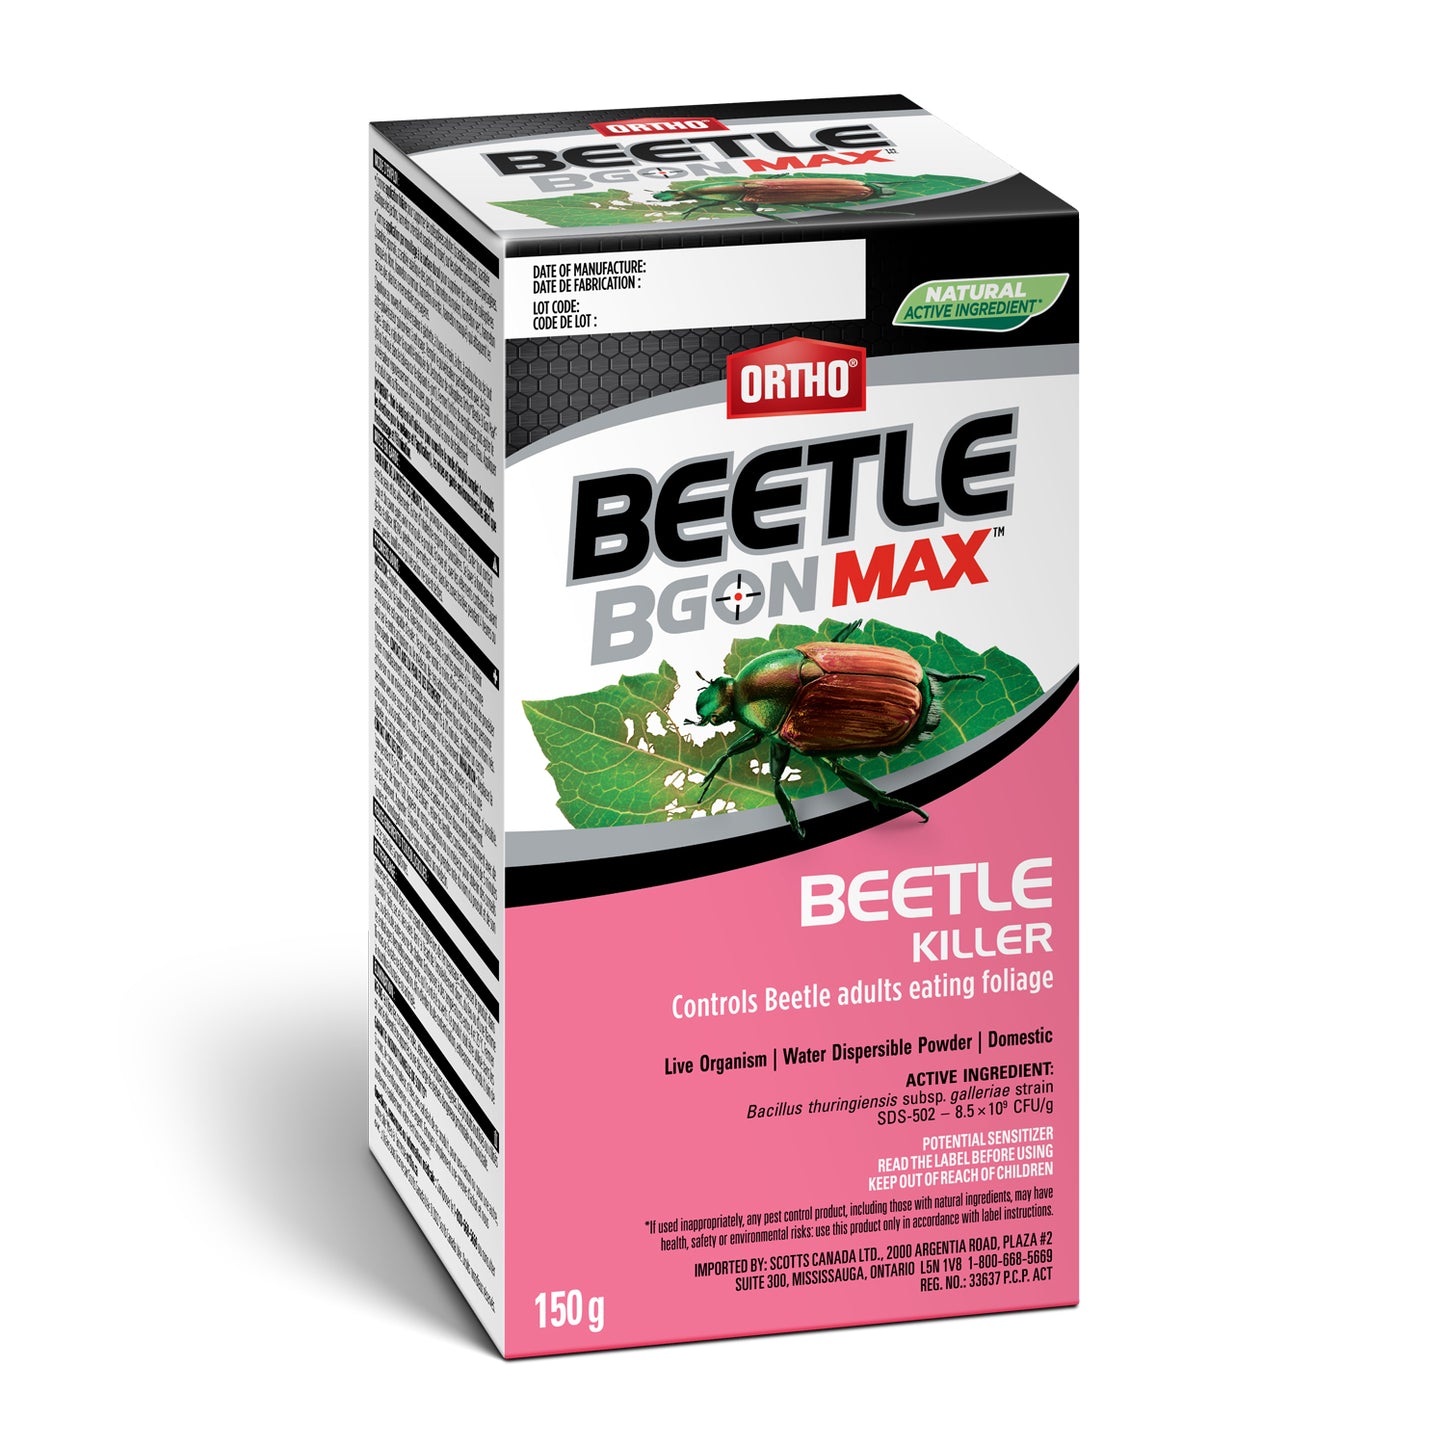 Ortho Beetle B Gone Max Beetle Killer